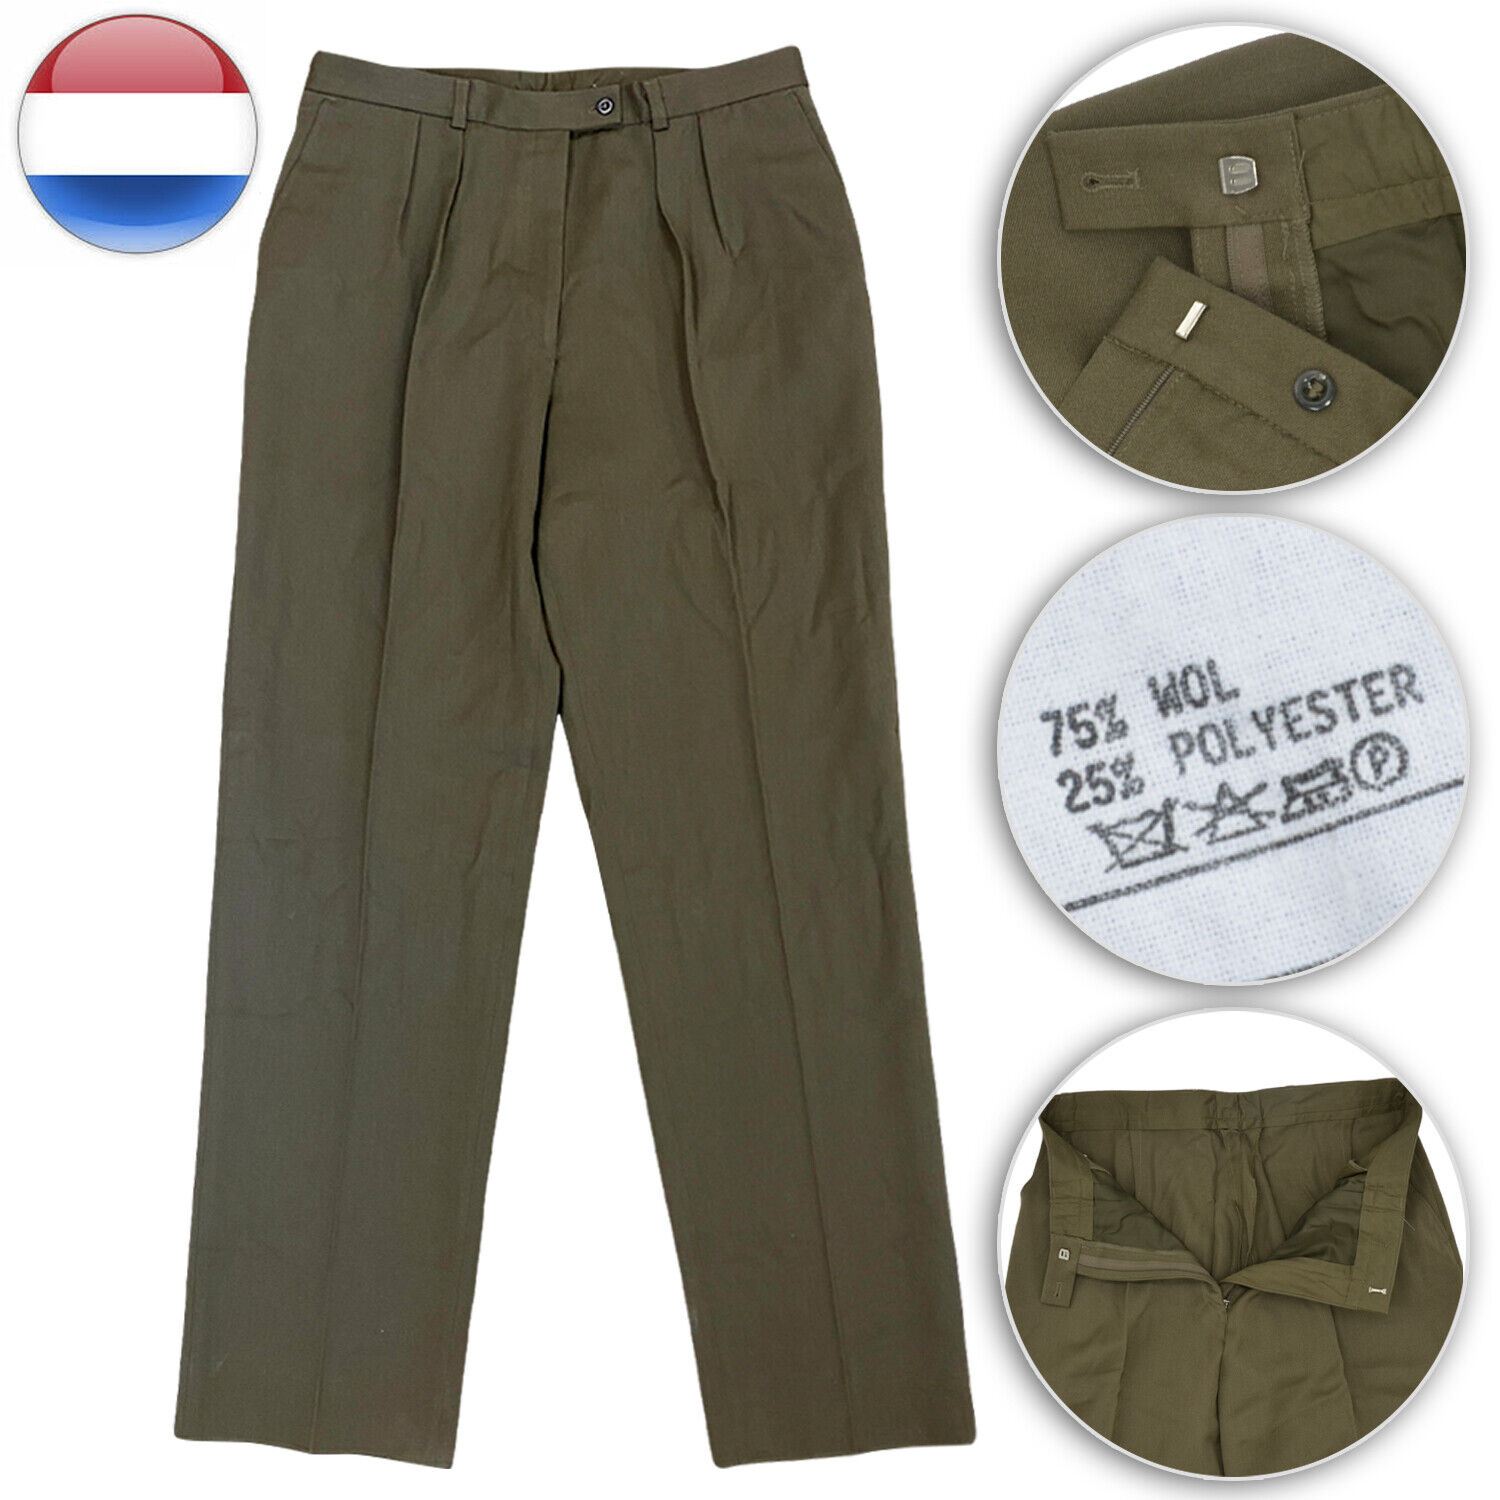 Wool 75% Dutch Army Trousers Pants Brown Khaki Dress Uniform Casual Retro ZIP